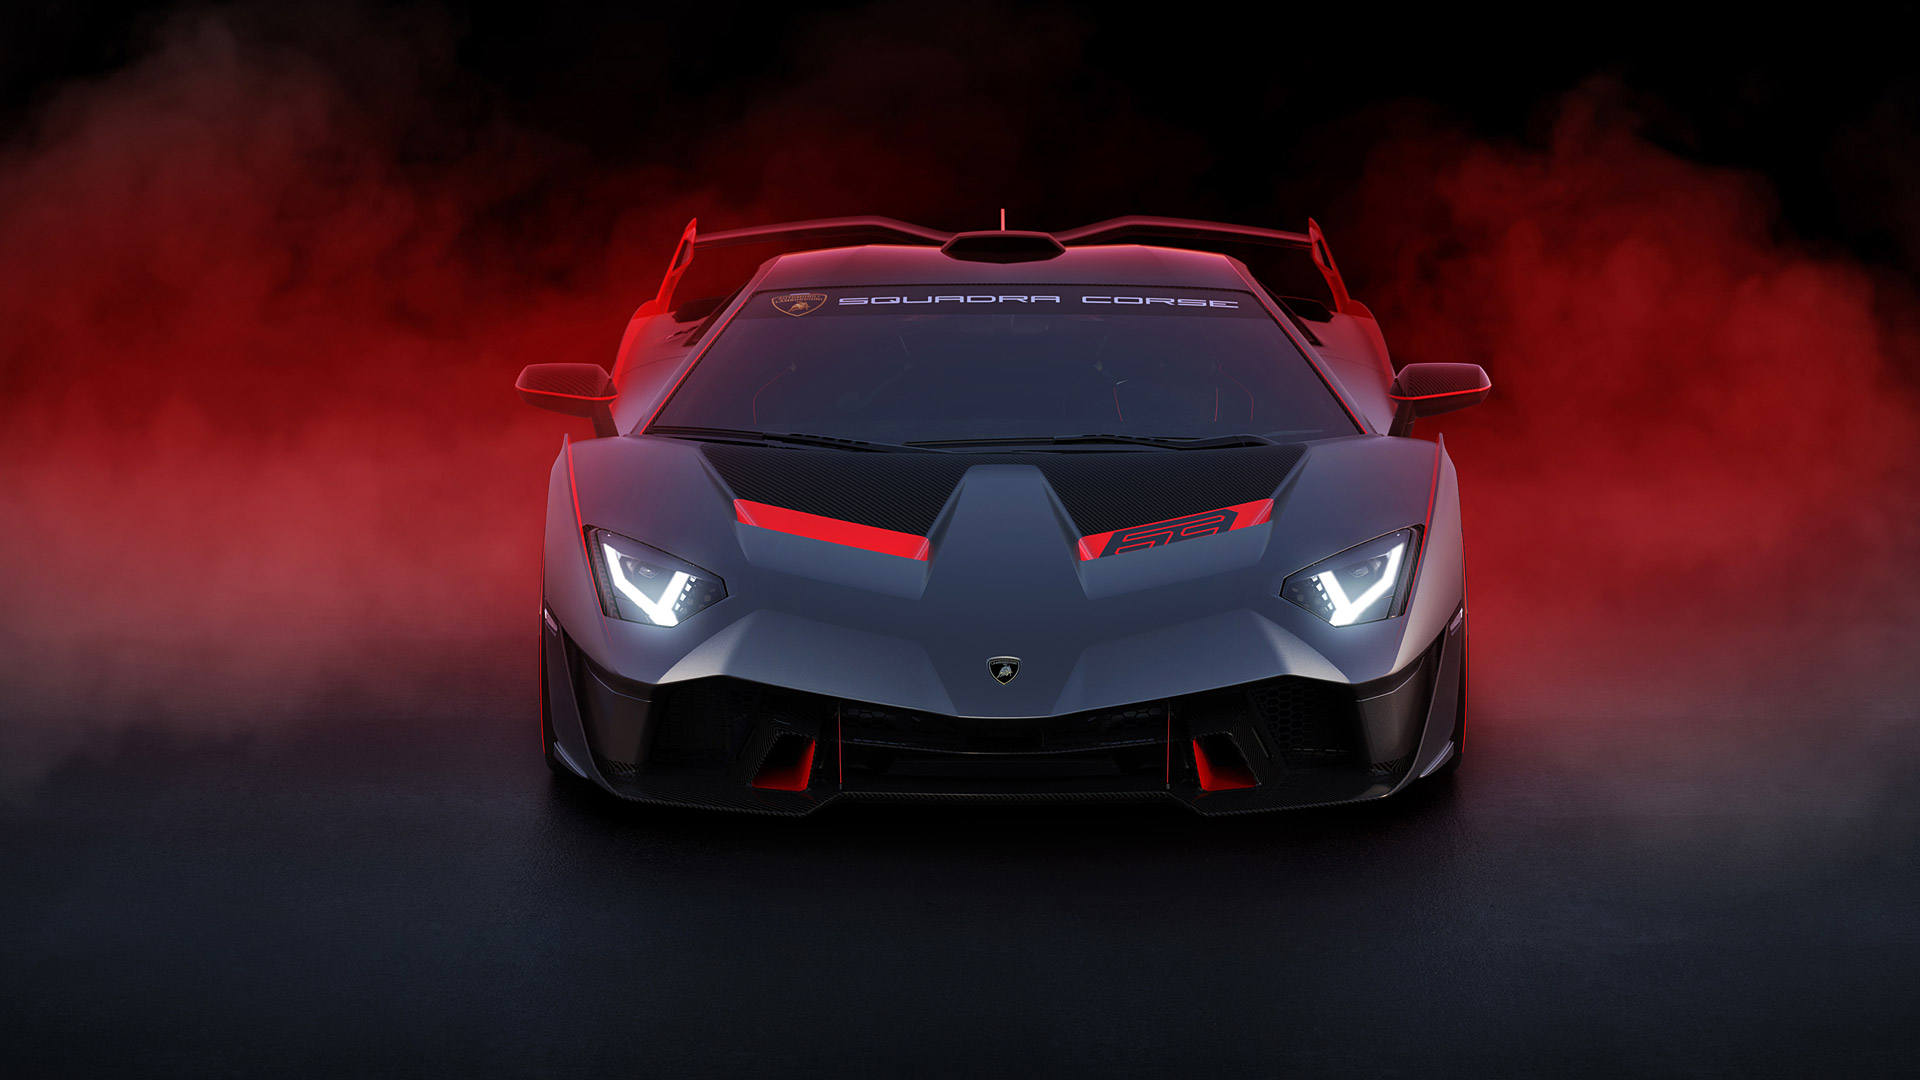  2019 Lamborghini SC18 Wallpaper.